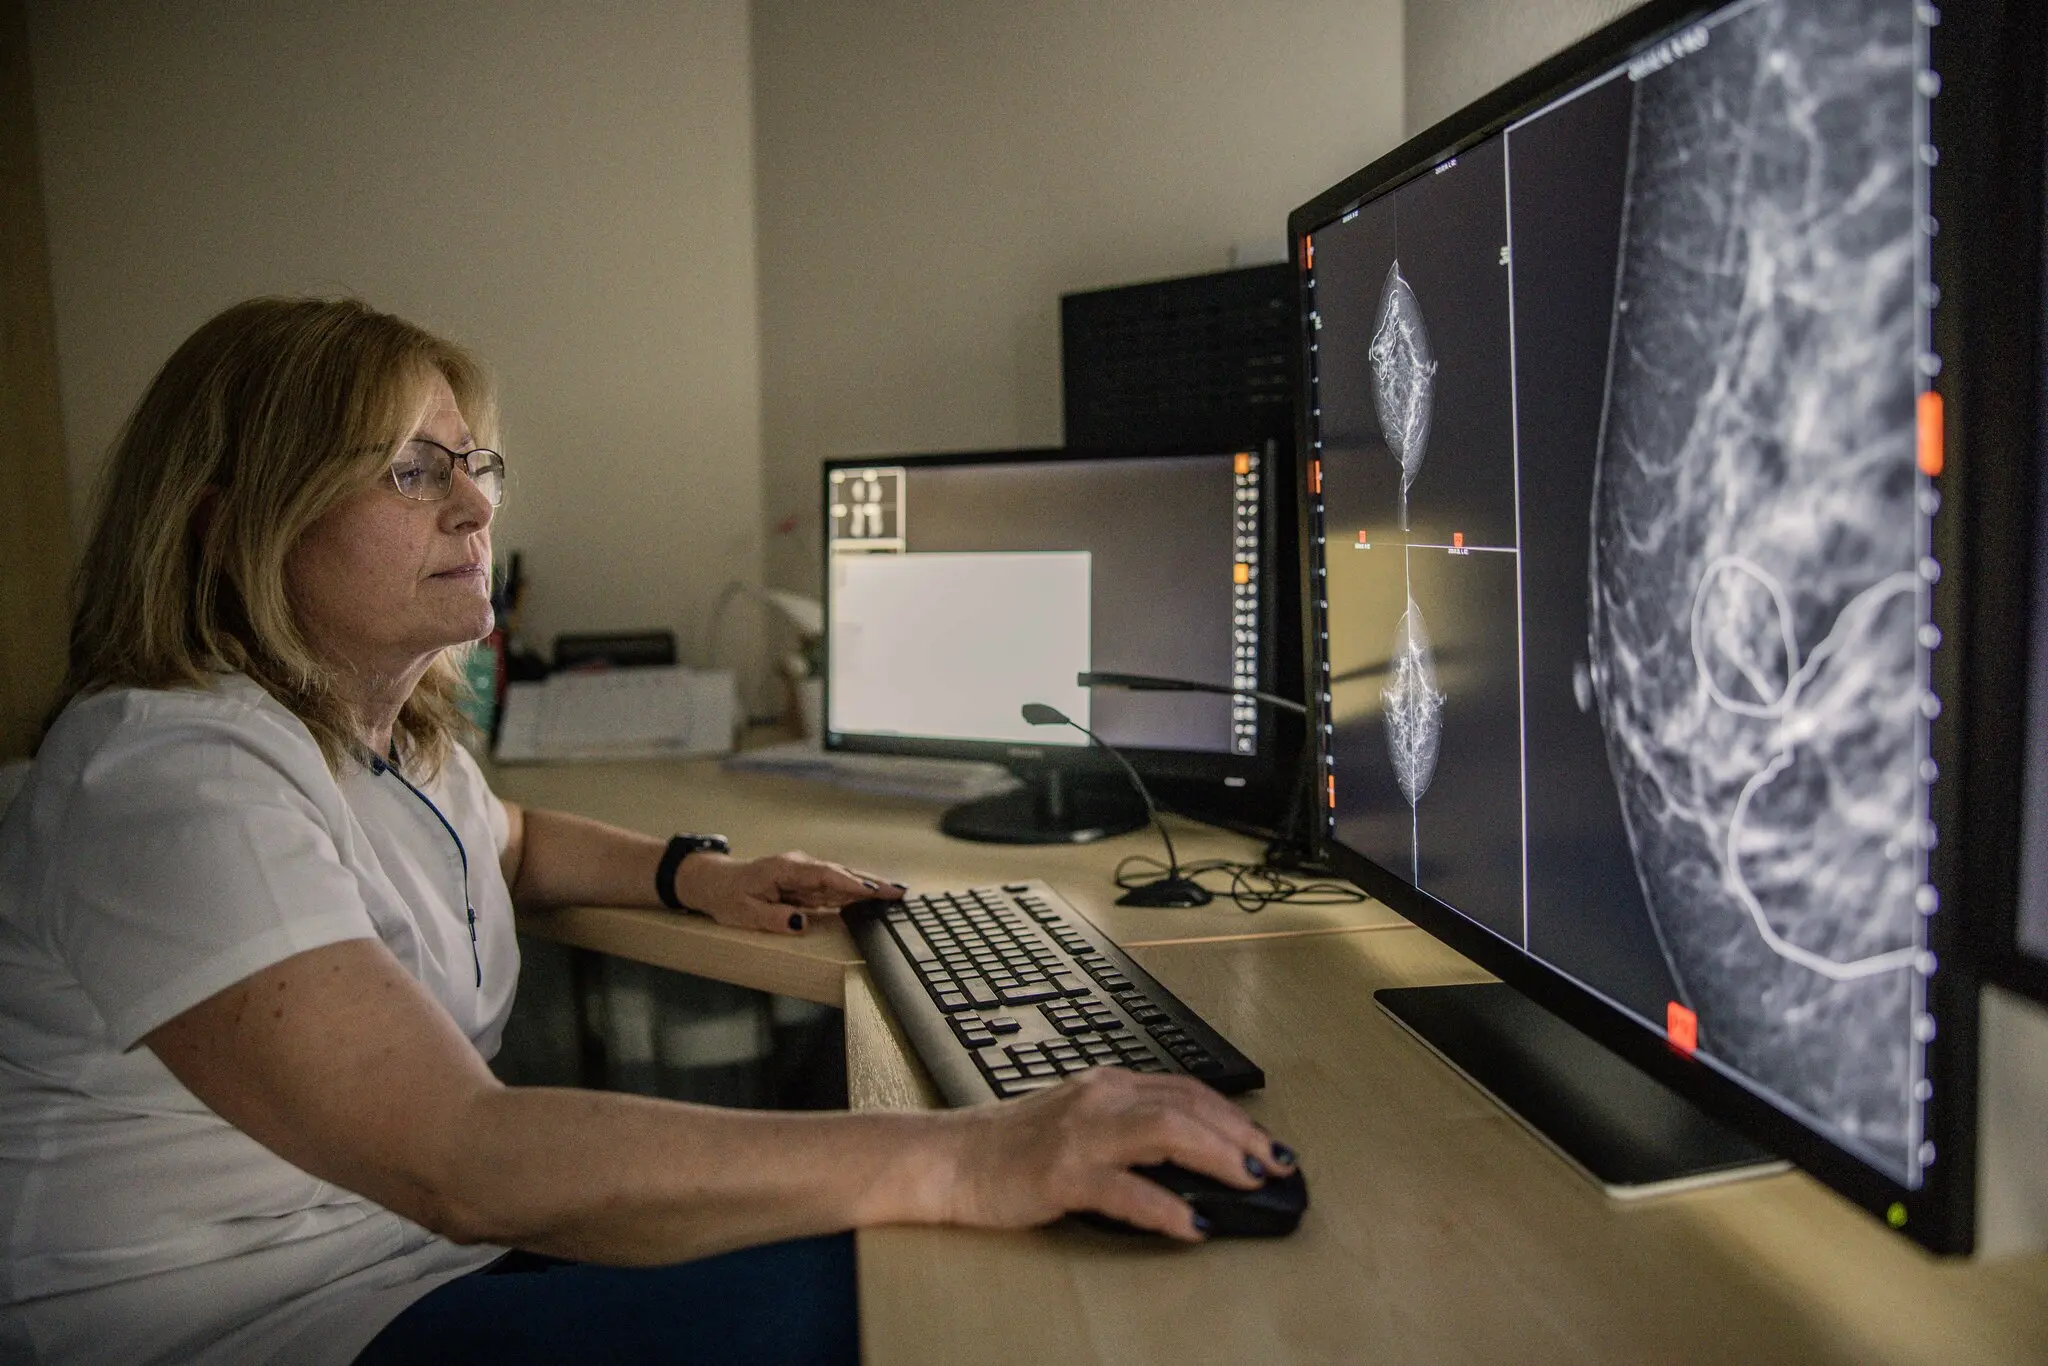 Dr. Éva Ambrózay, a radiologist at Bács-Kiskun County Hospital, looks at a computer screen displaying a cancer scan.